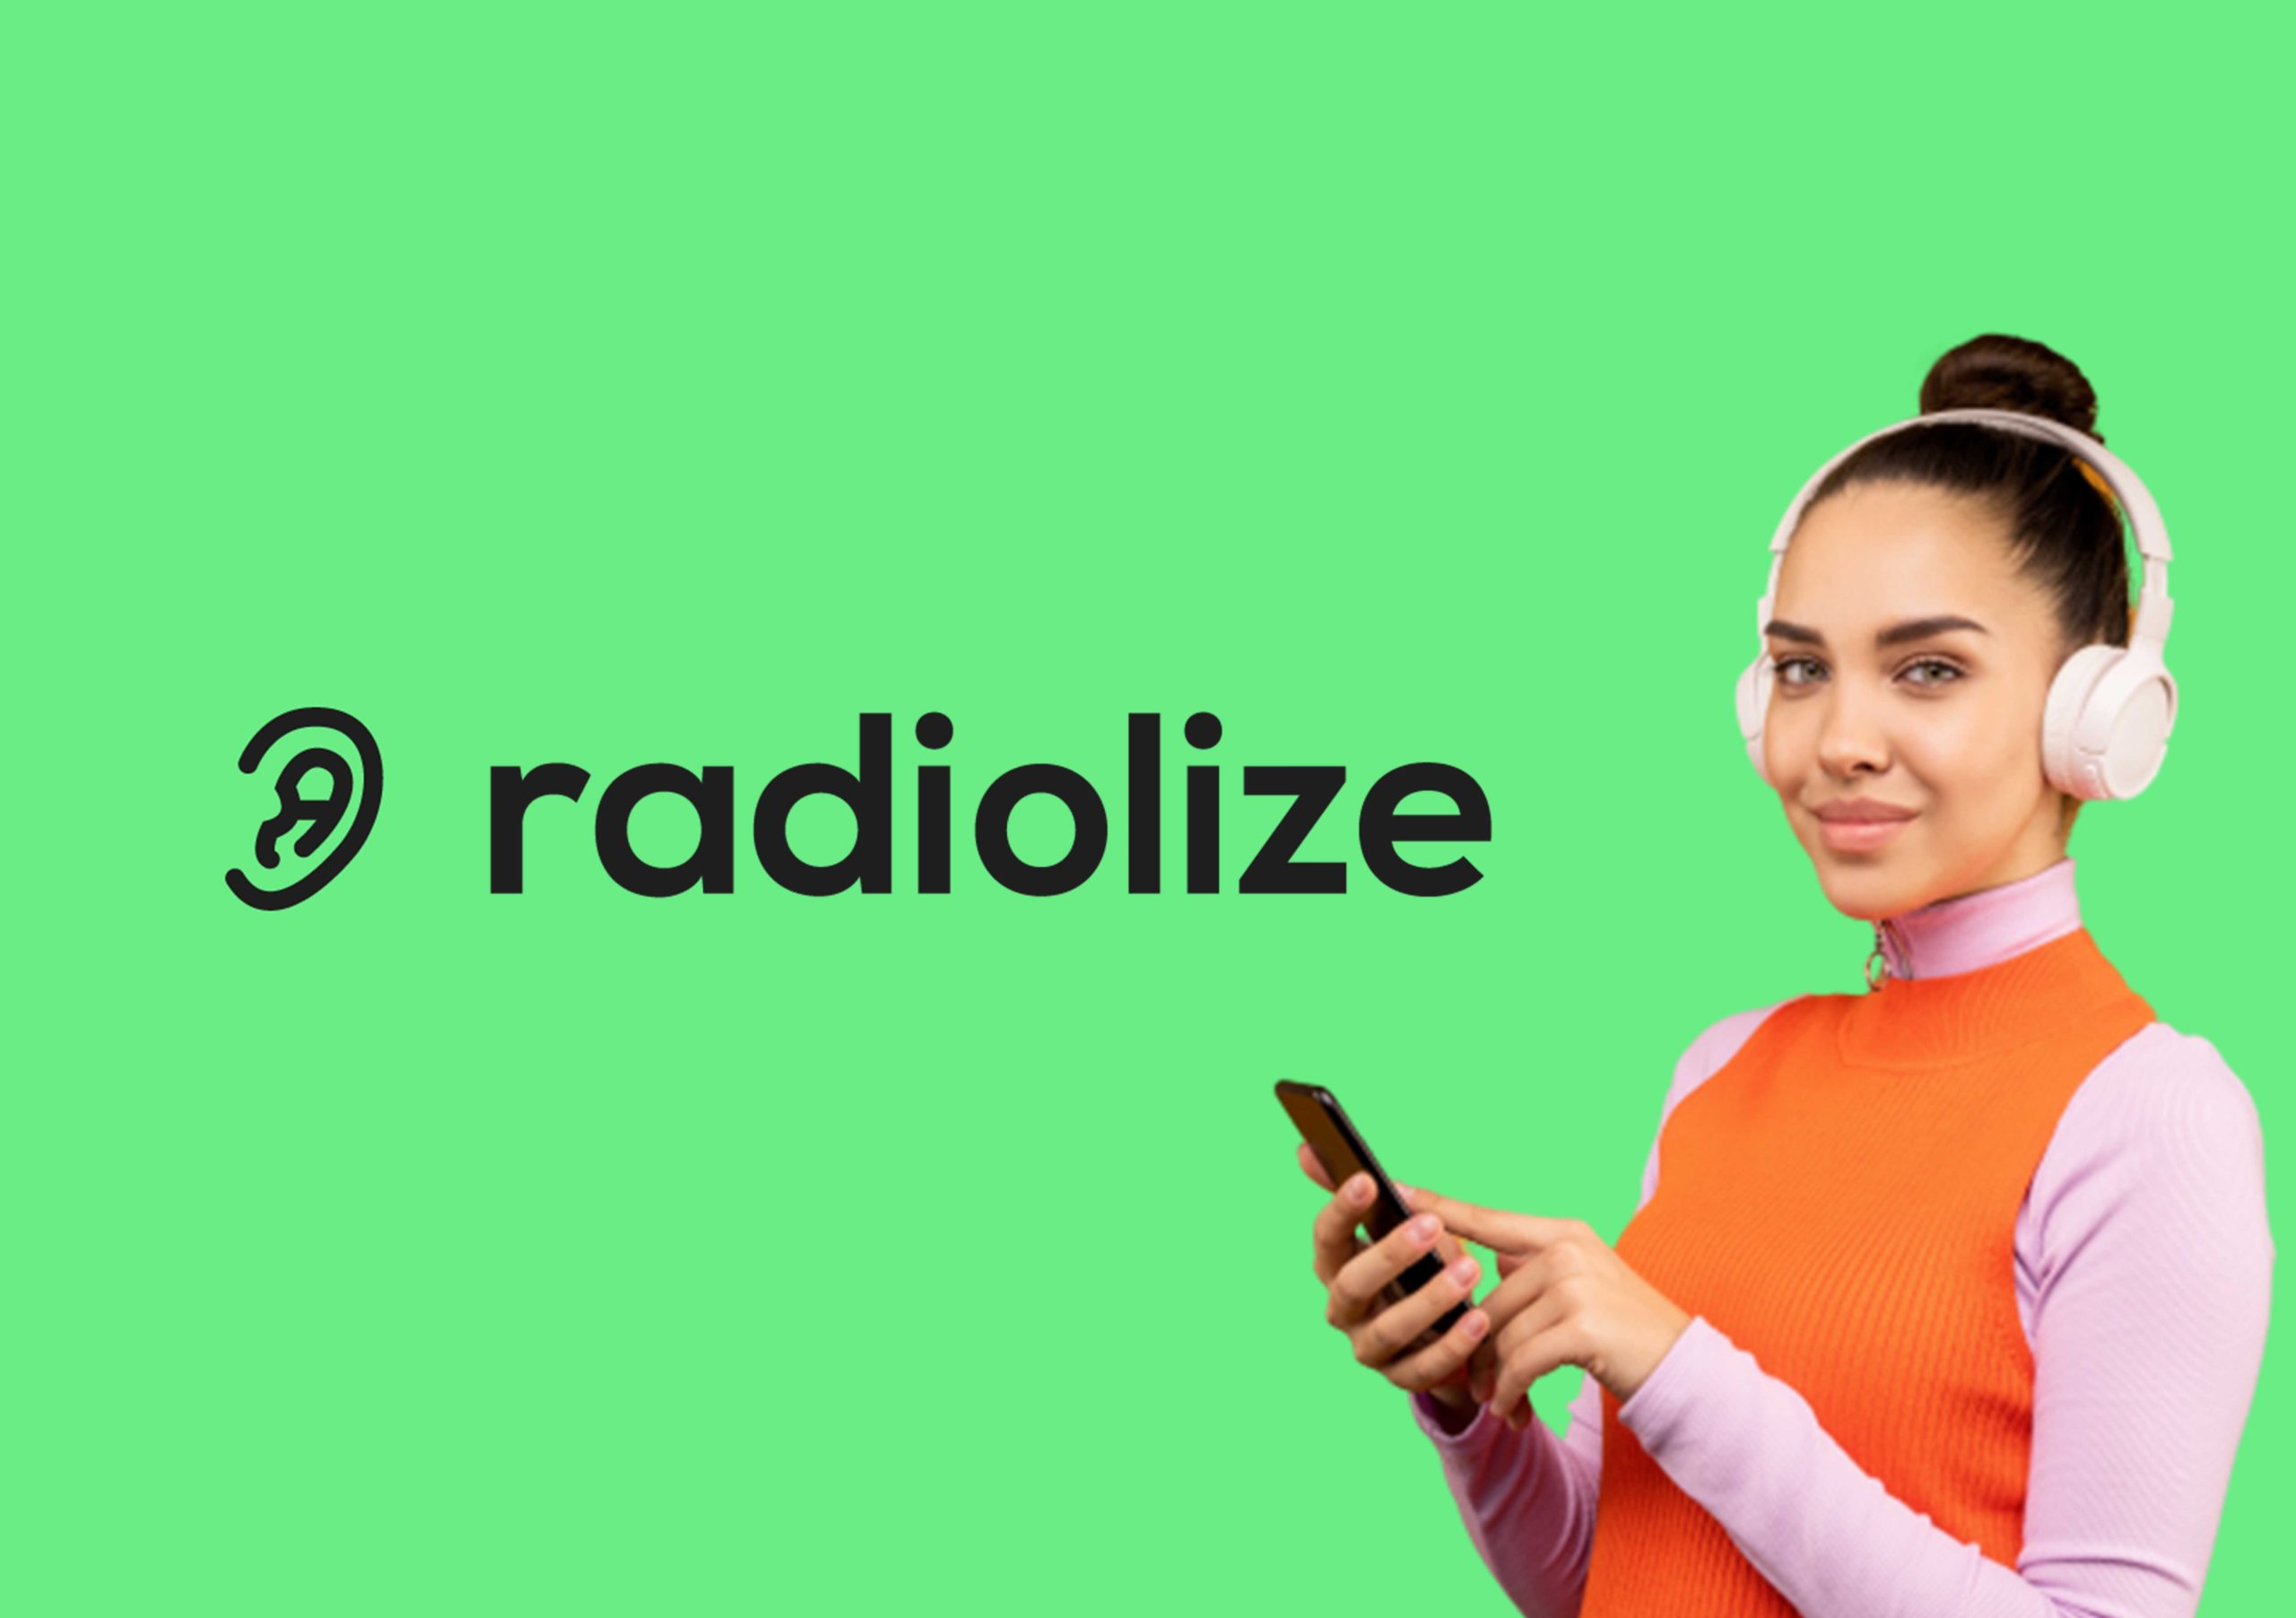 radiolize-radioking